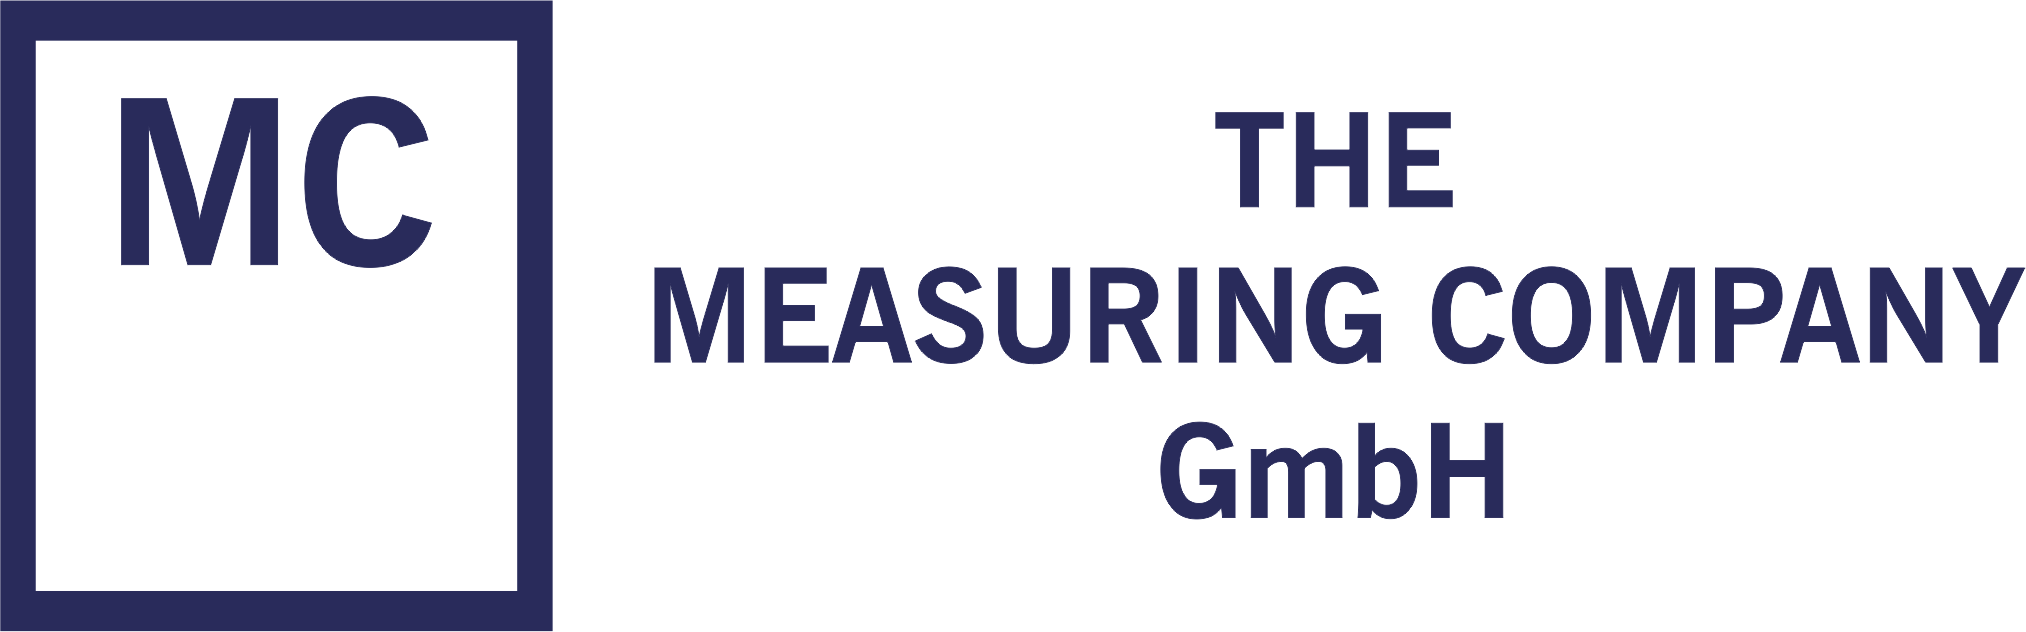 The Measuring Company GmbH